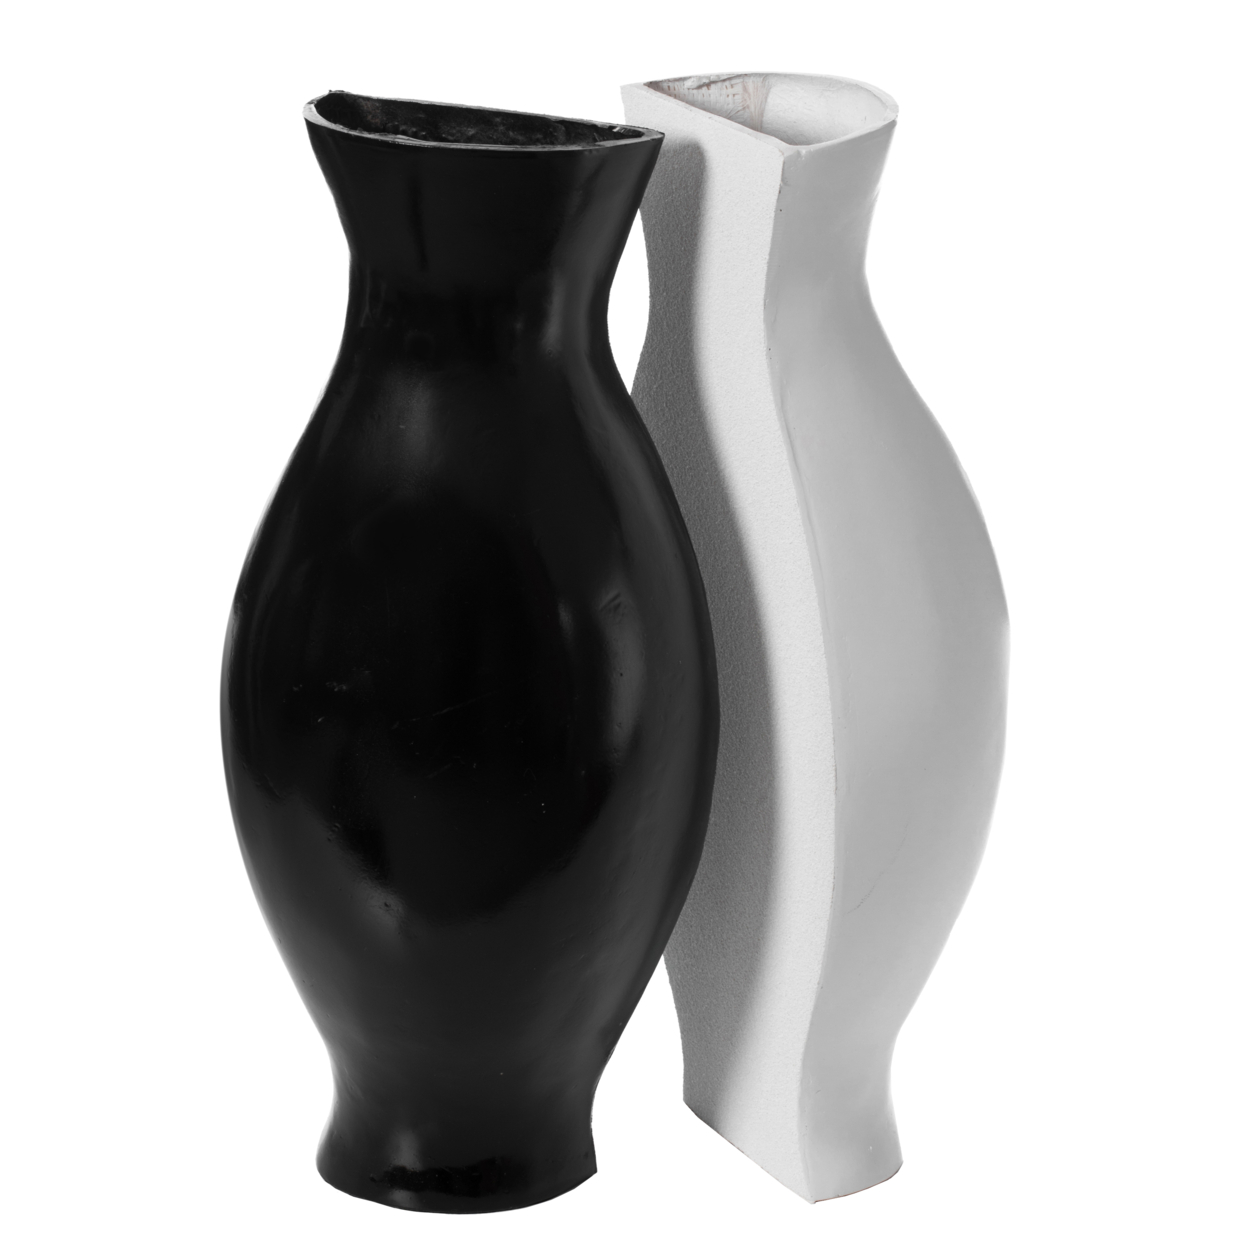 Tall Narrow Vase, Sleek Split Vase, Modern Floor Vase, Decorative Gift, Vase For Interior Design, 24.5 Inch Vase - Set Of 1 Black And 1 Whit